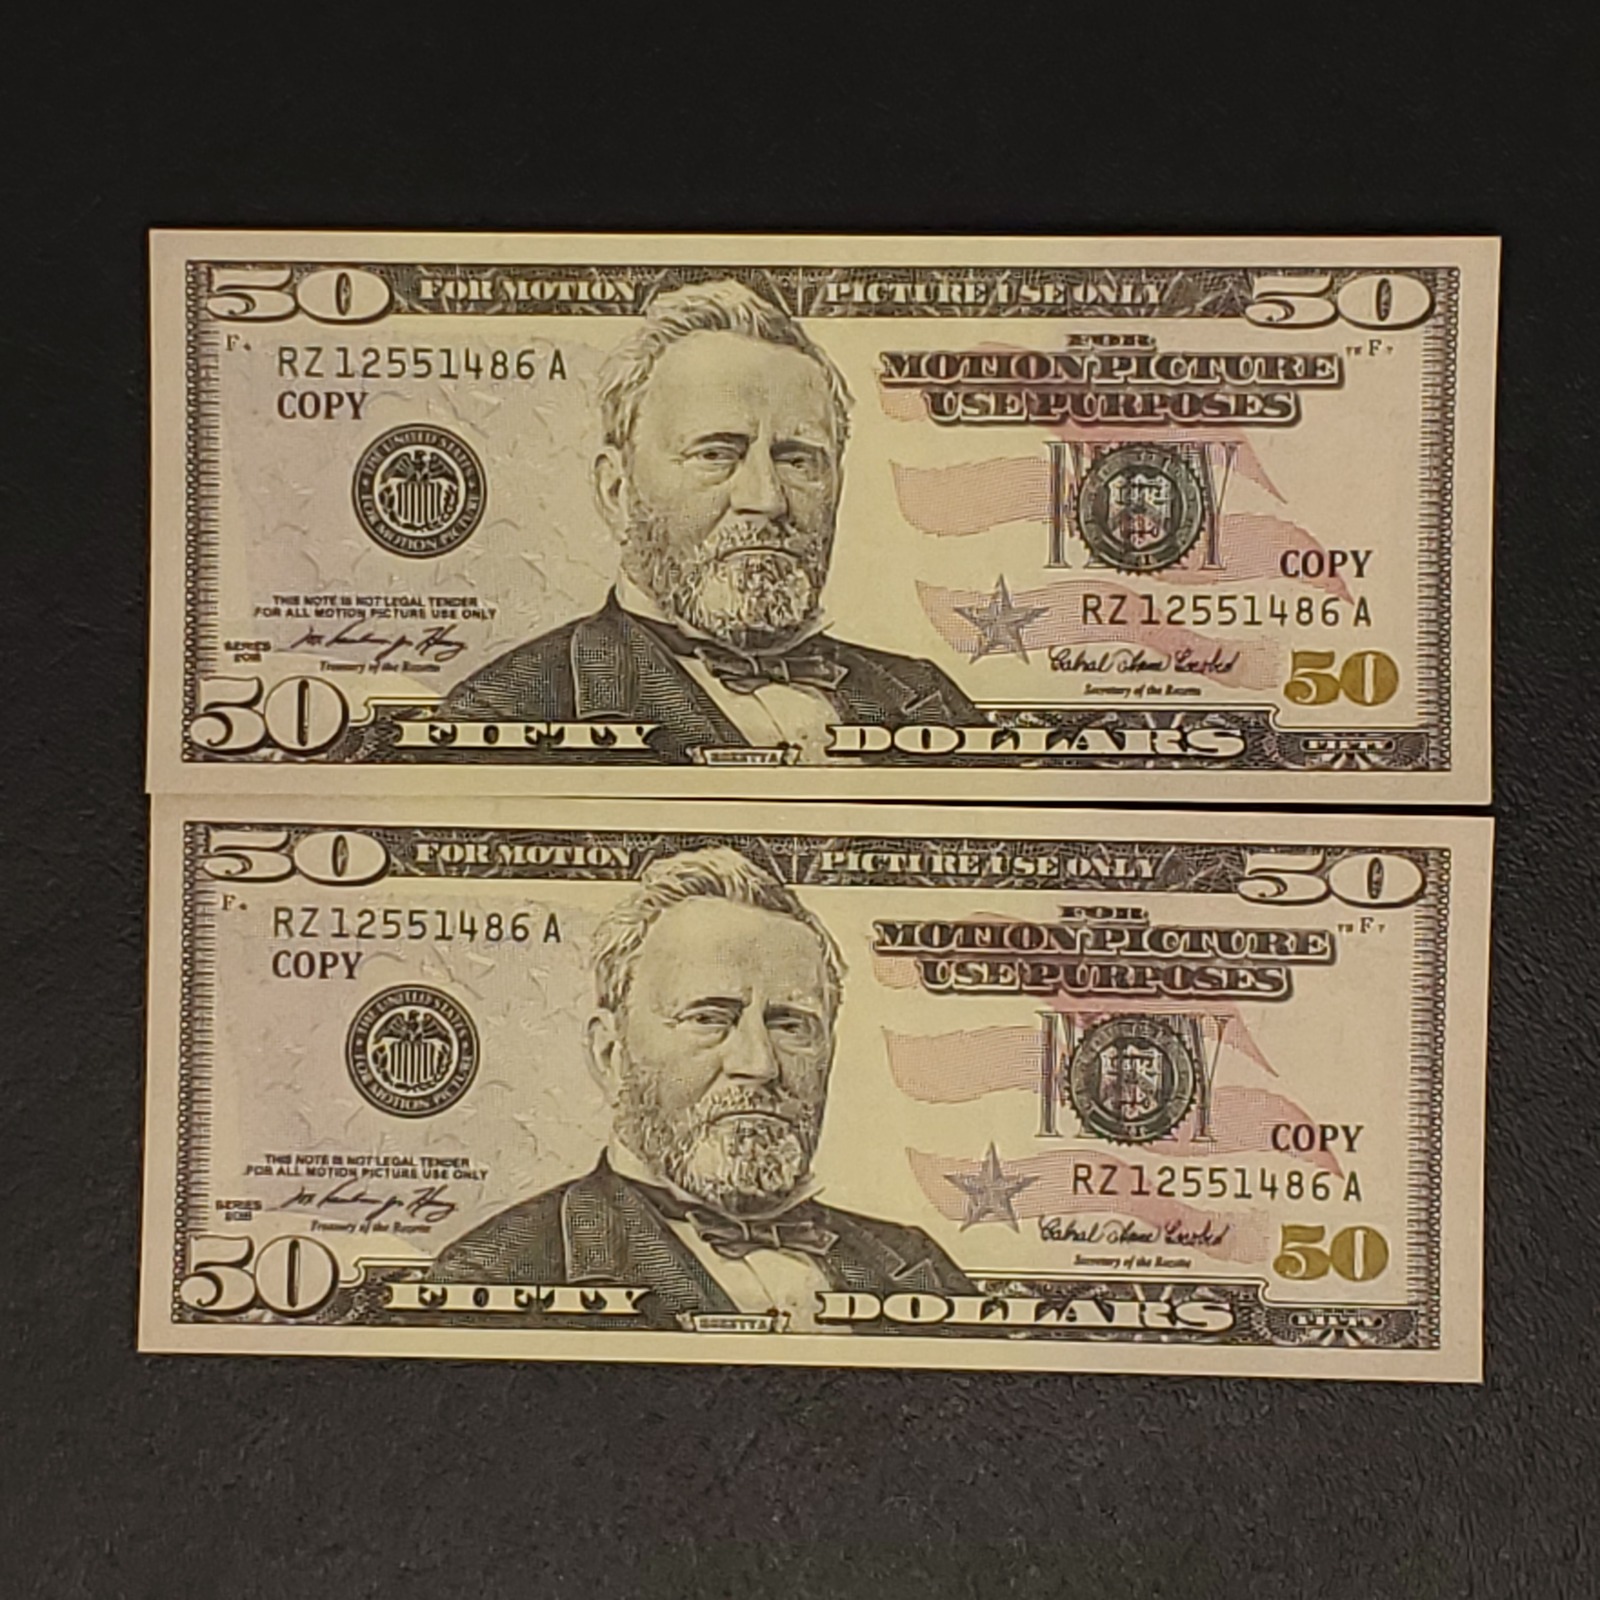 50,000 Dollar Full Printed 50 Realistic Prop Money Bills Fake Movie